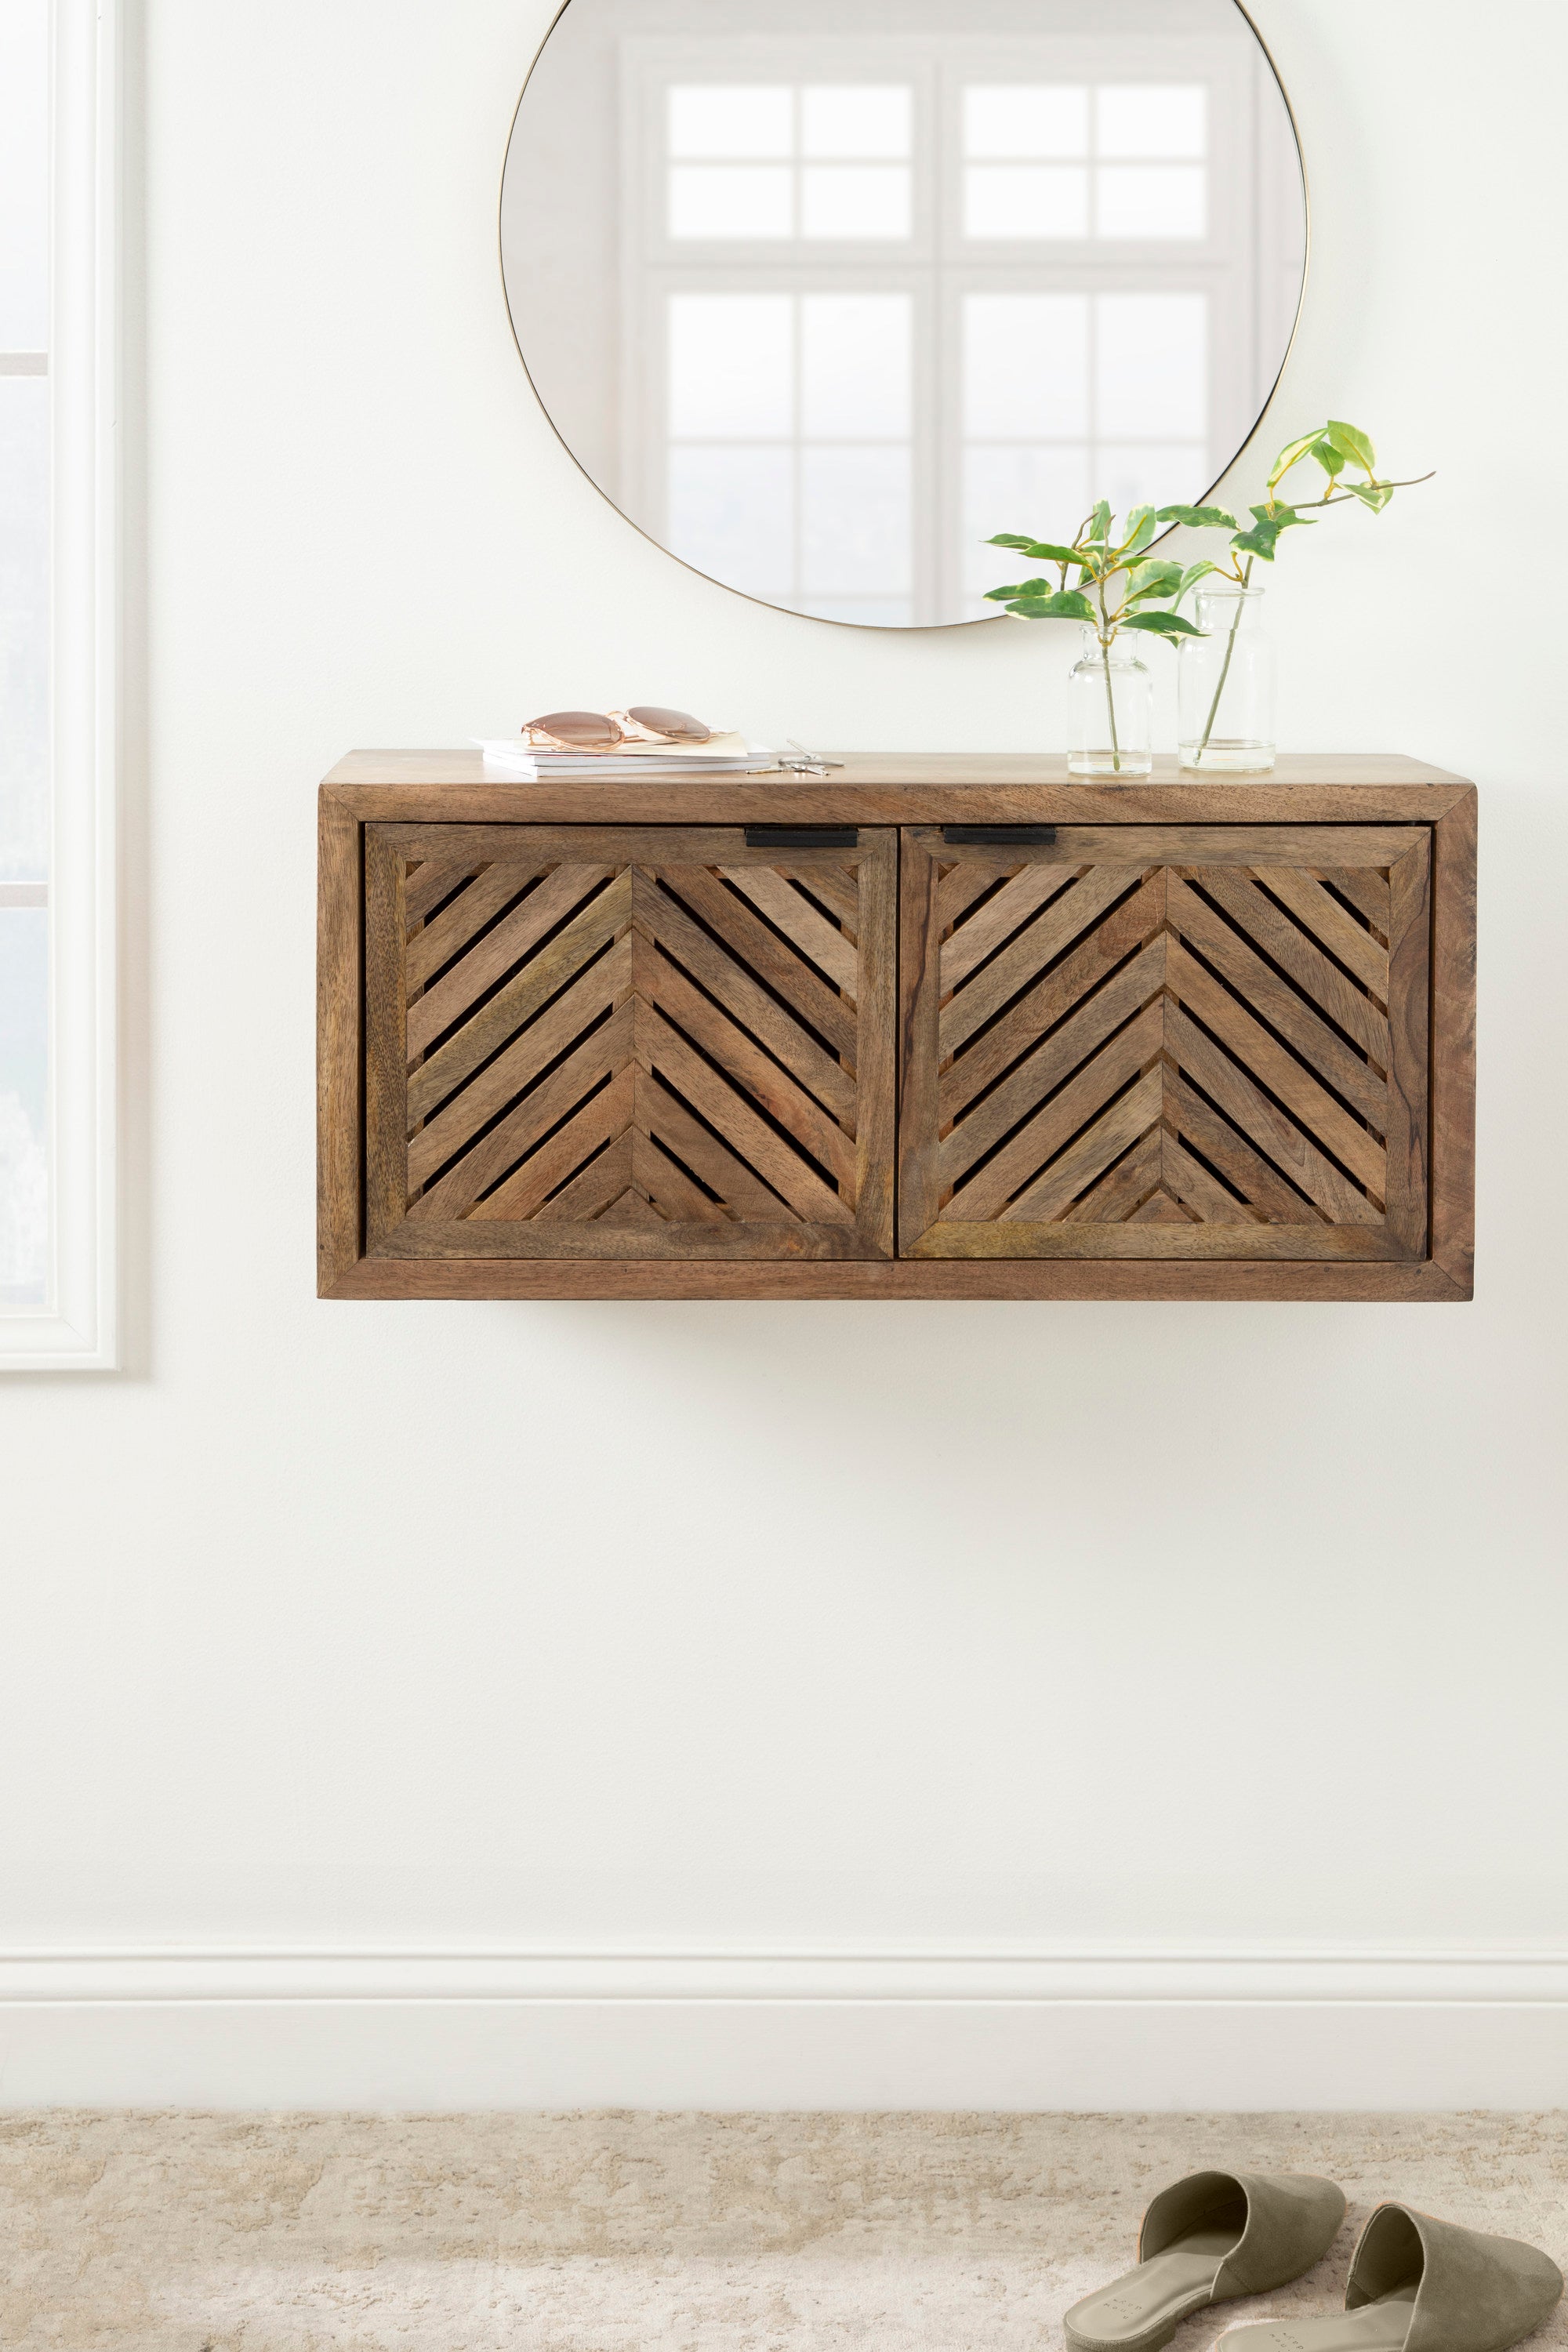 Mezzeta Decorative Wood Wall Cabinet